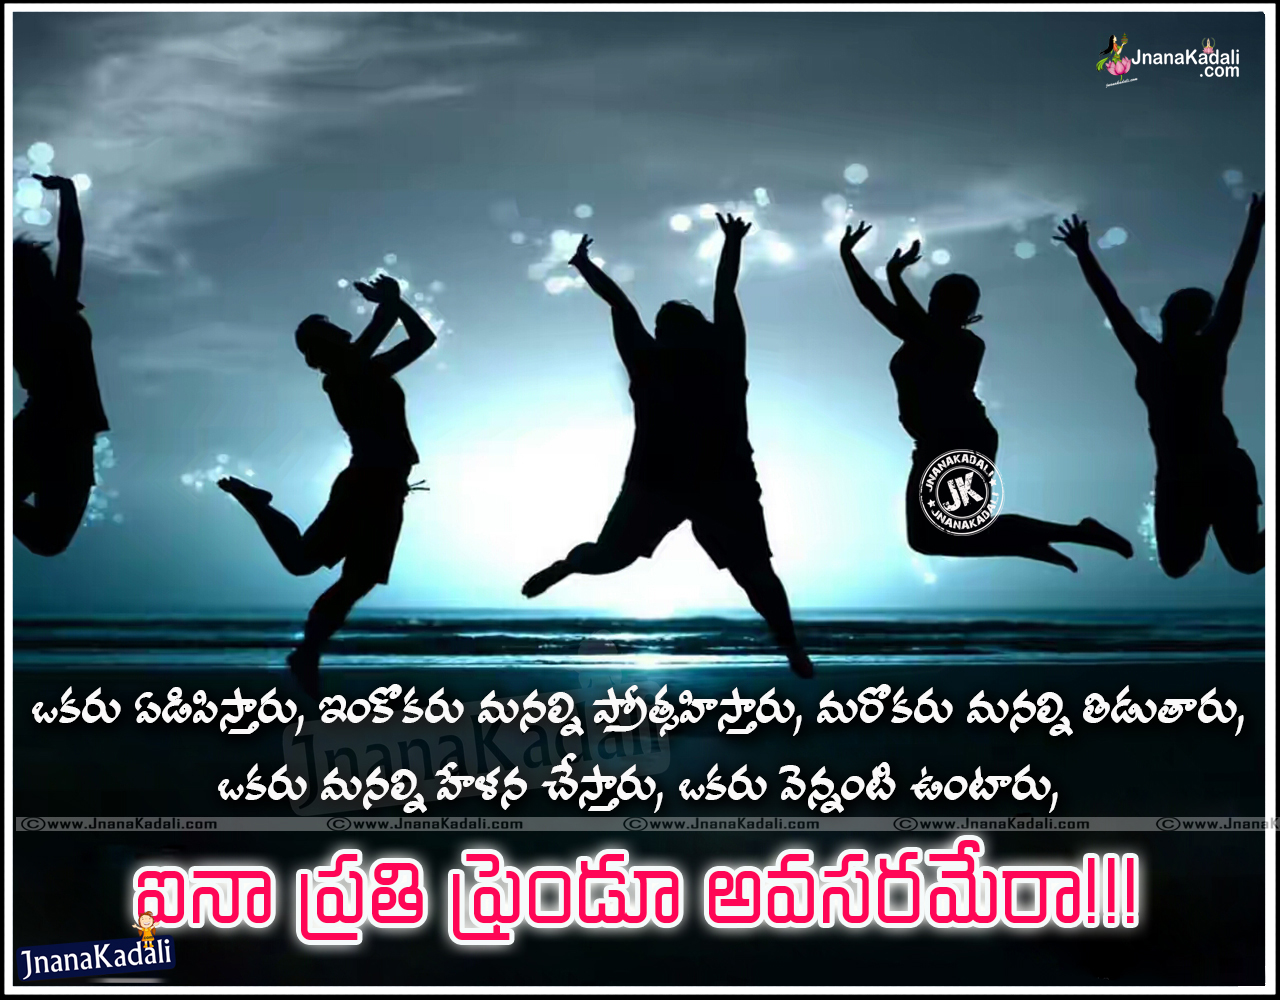 Telugu Friendship Quotes for Facebook,whatsapp | JNANA KADALI.COM ...